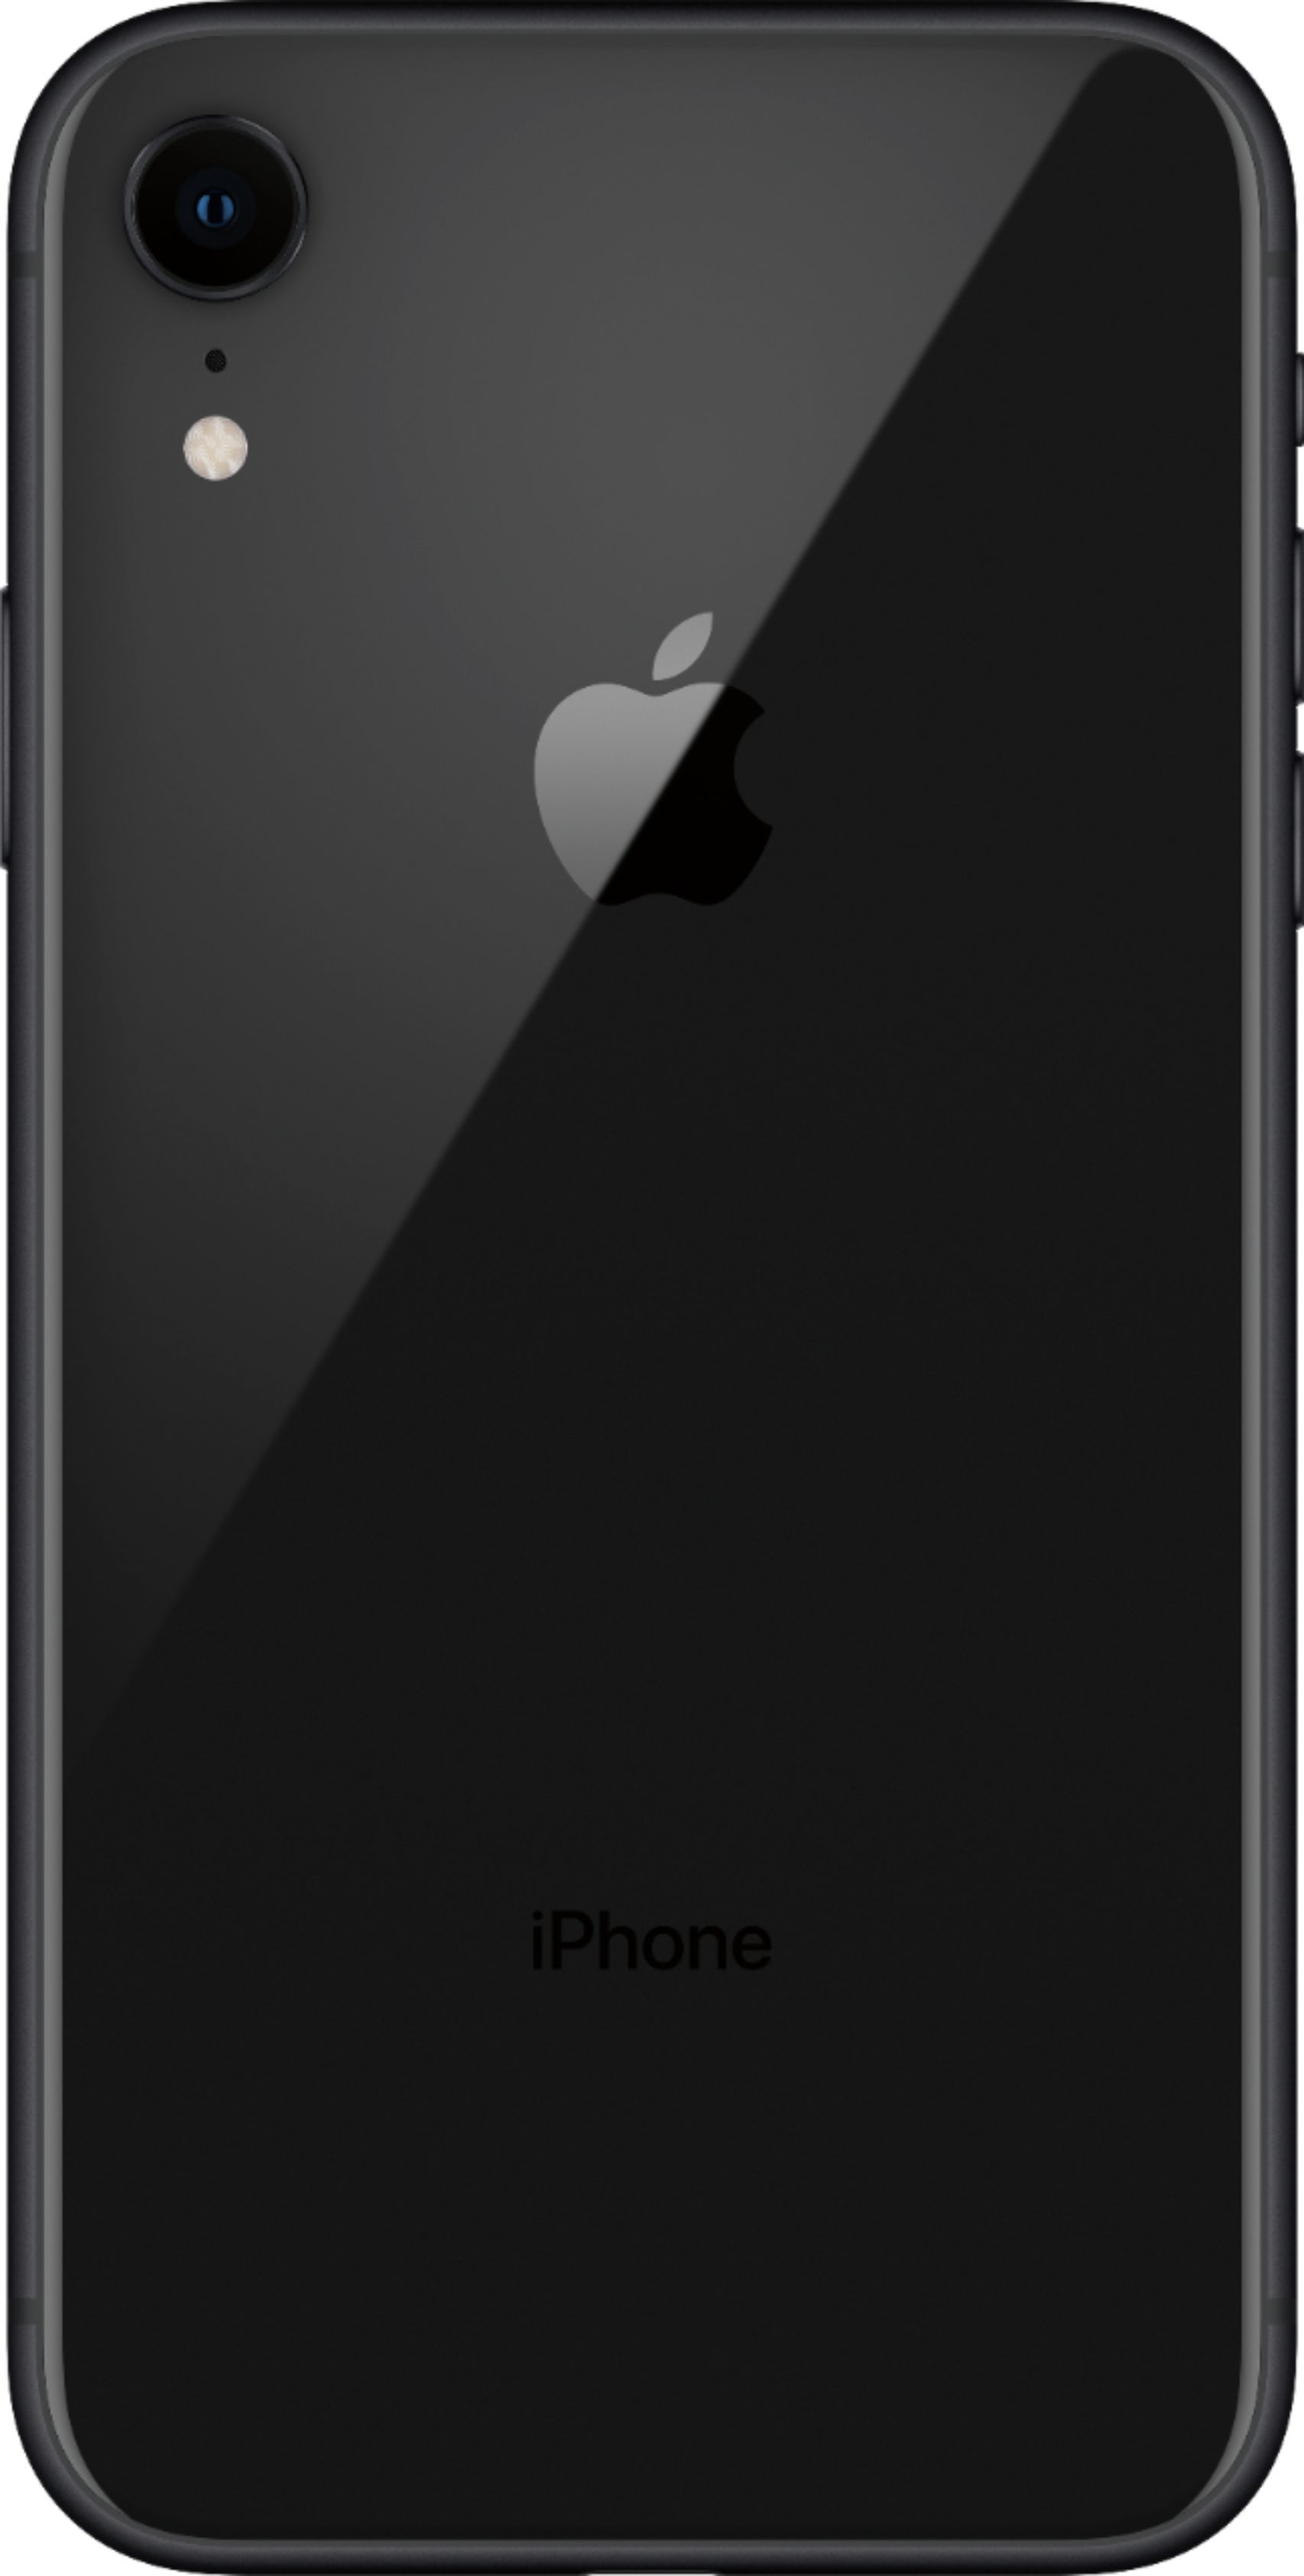 iPhone XR Black 64GB-